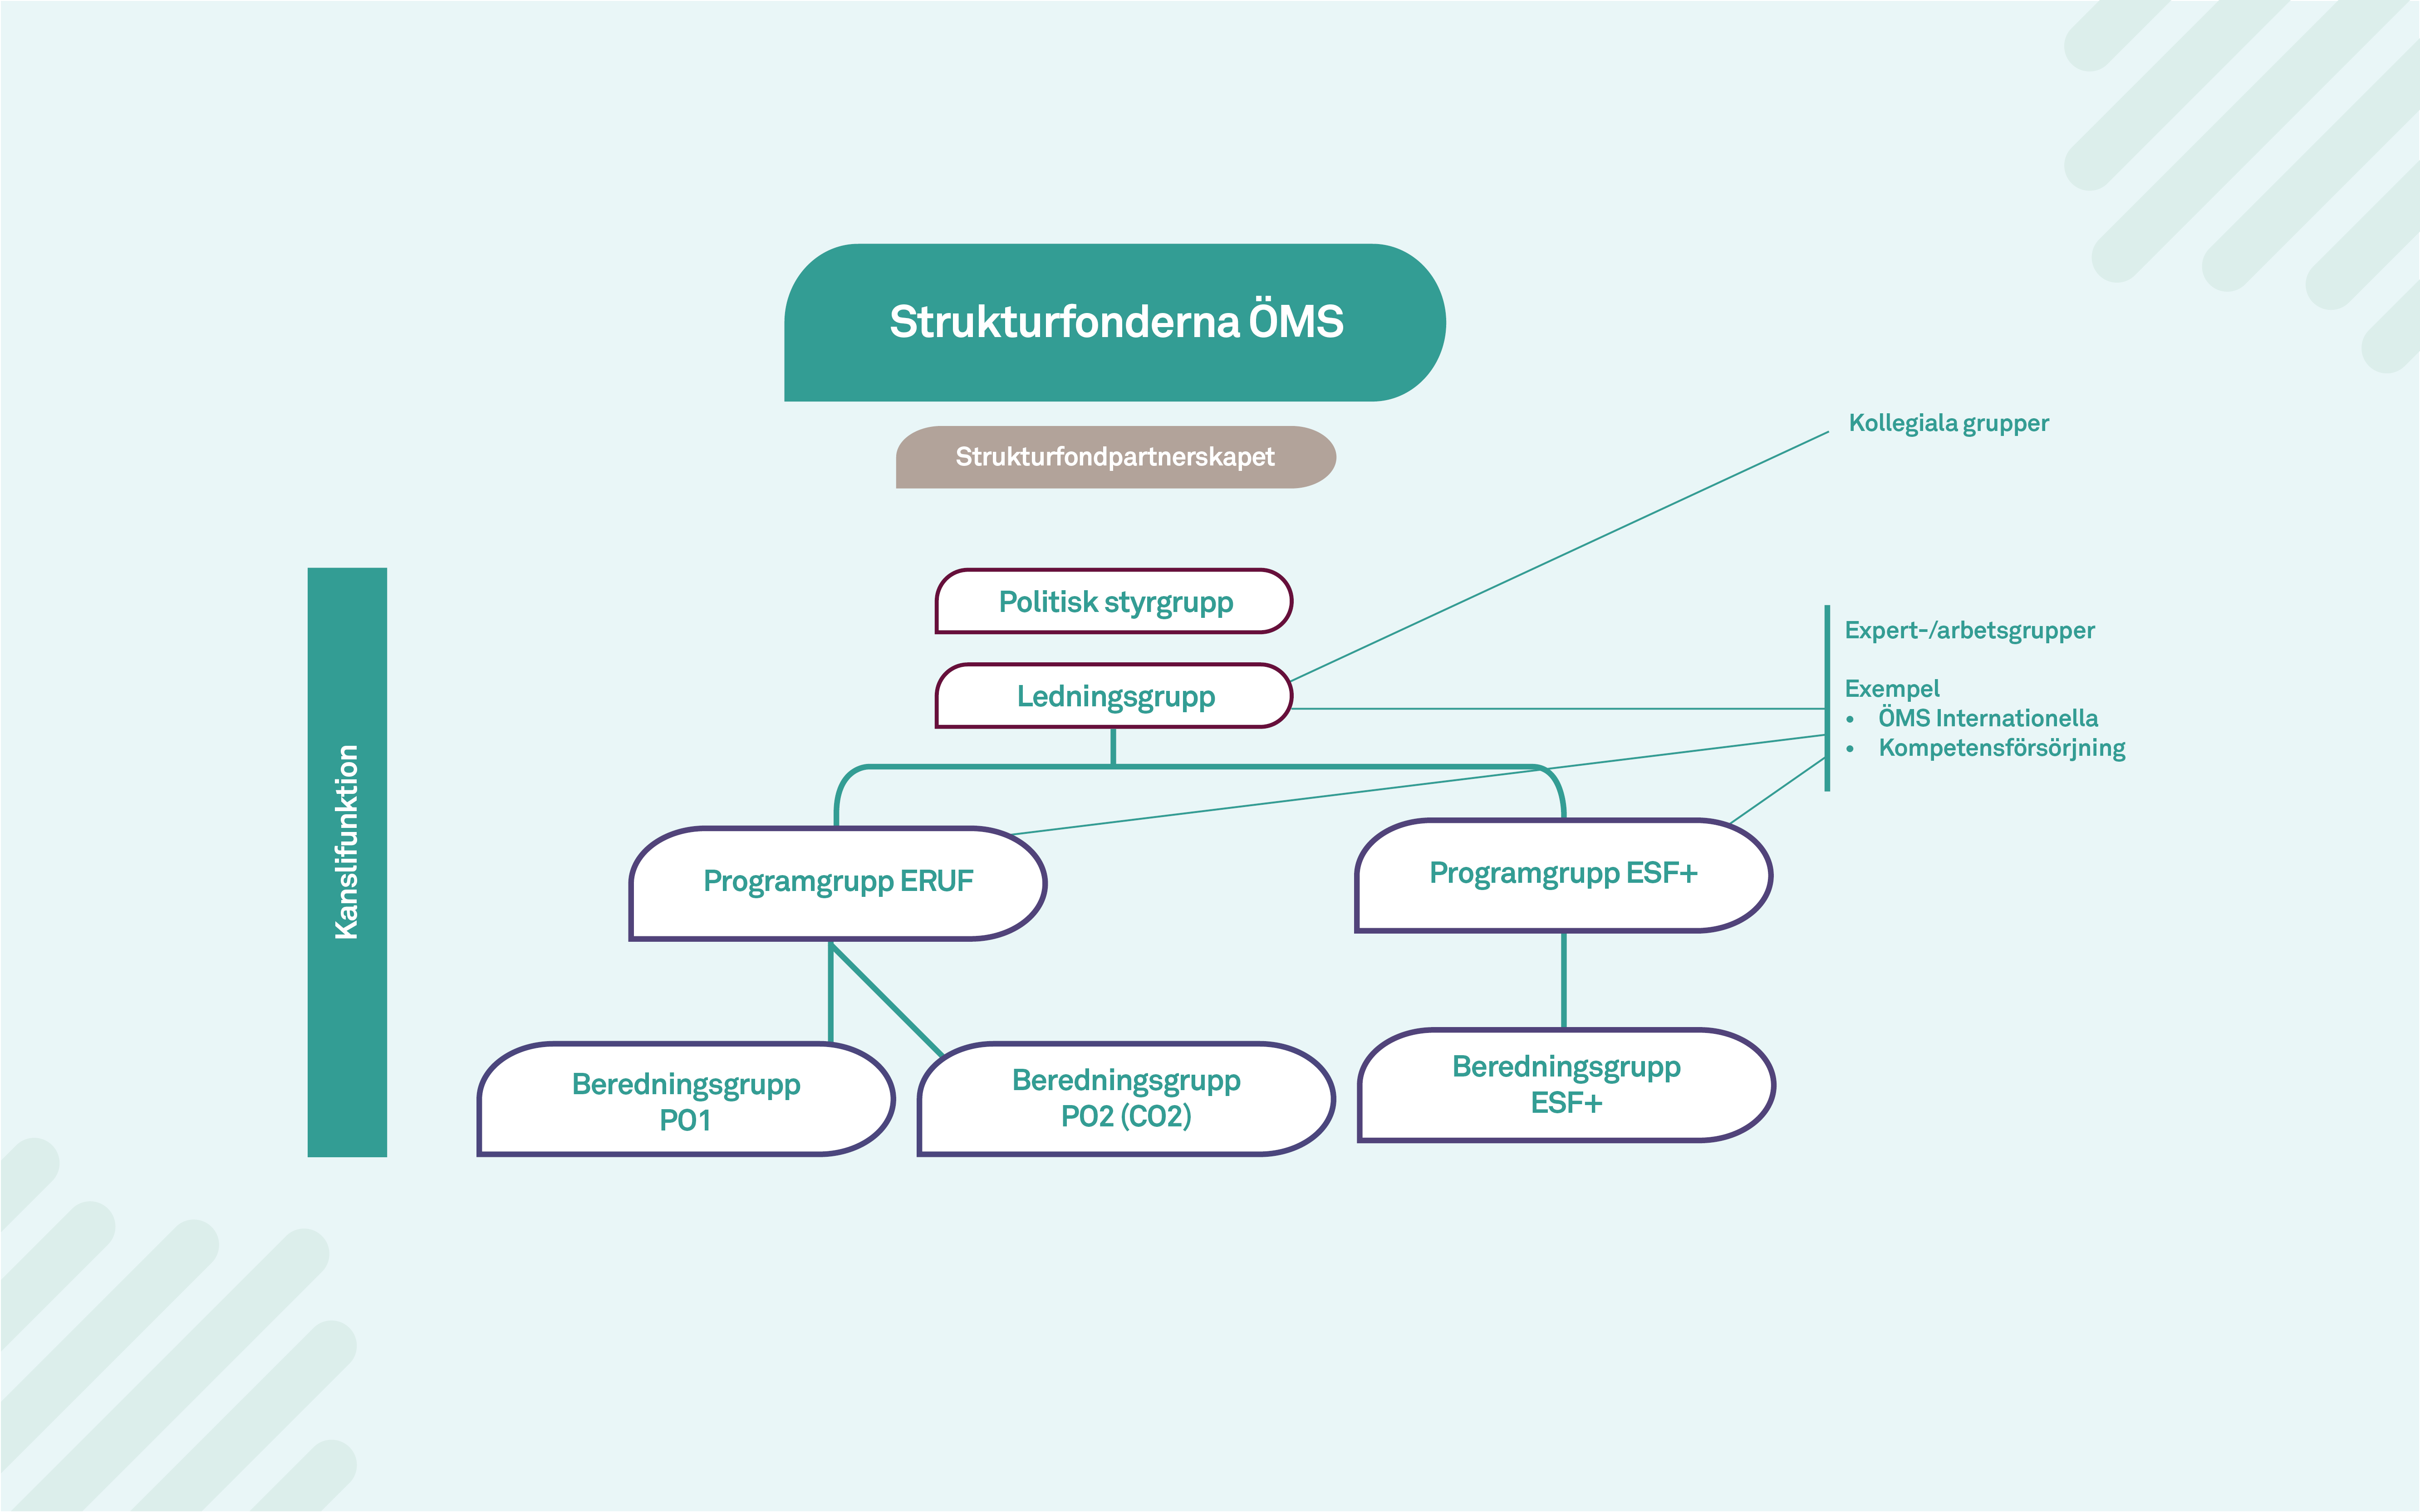 Organisationsschema över strukturfondernas organisation.